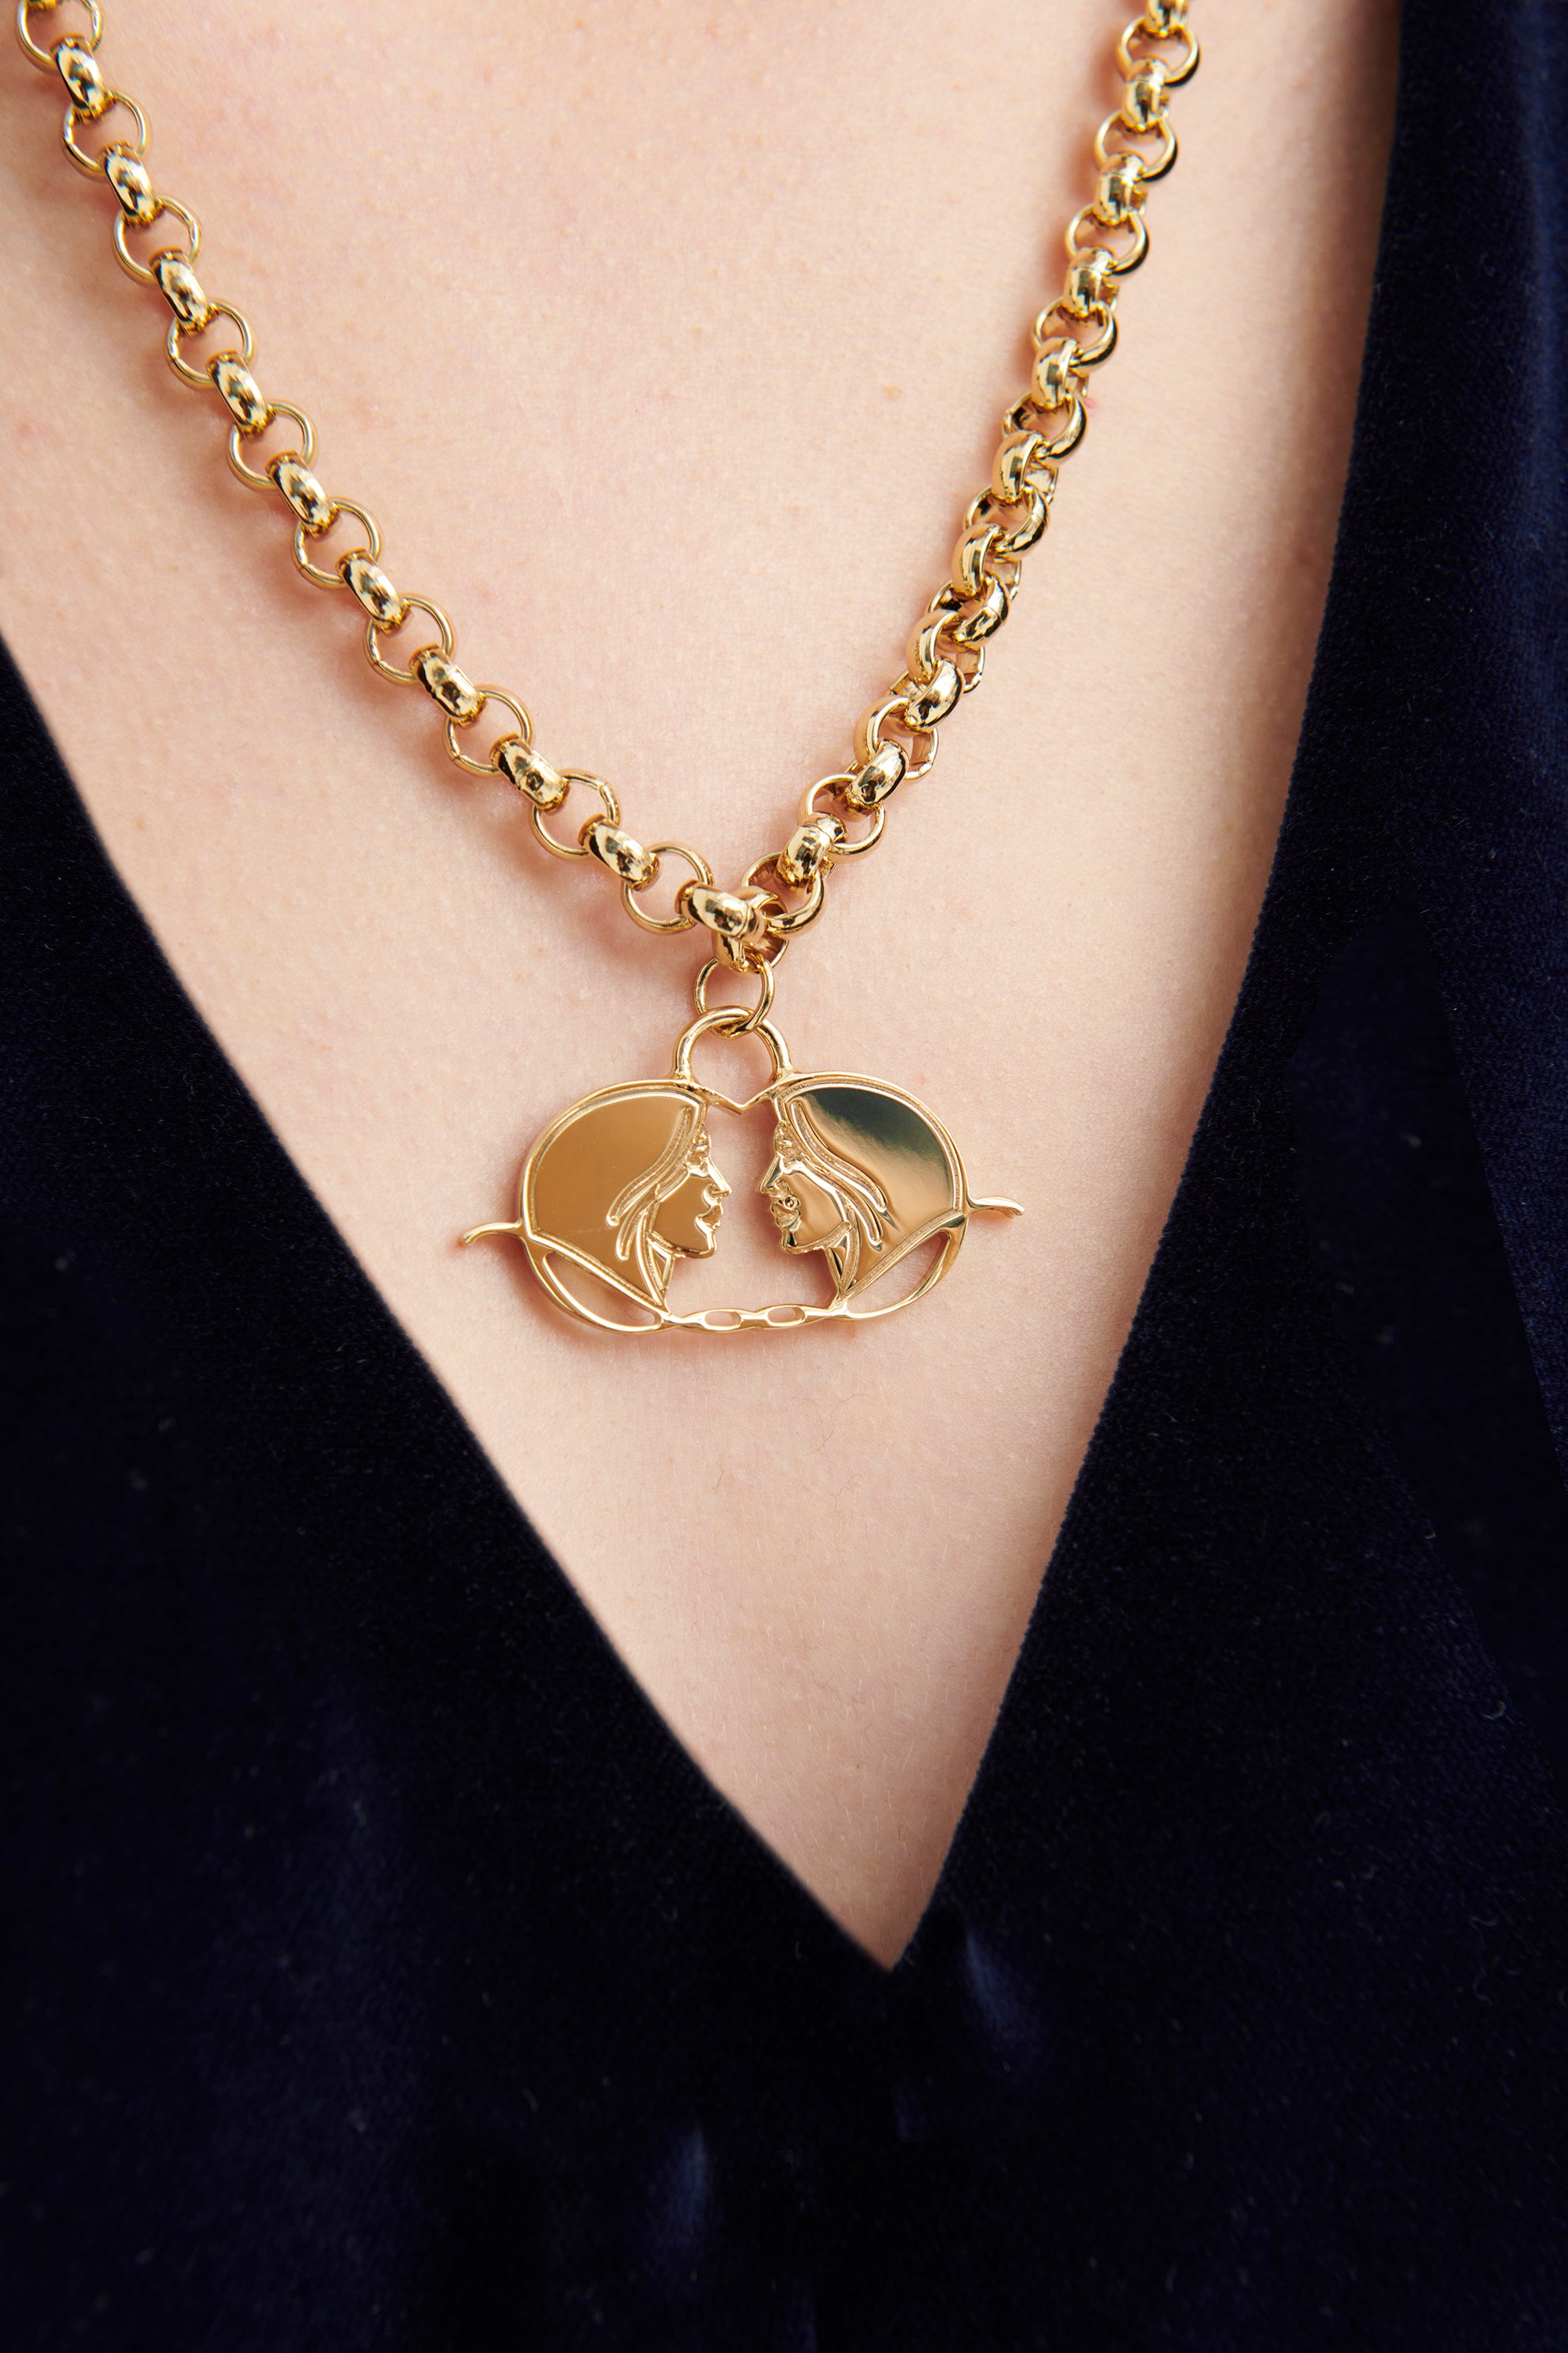 GULNOZA DILNOZA Logo pendant necklace in gold finish metal